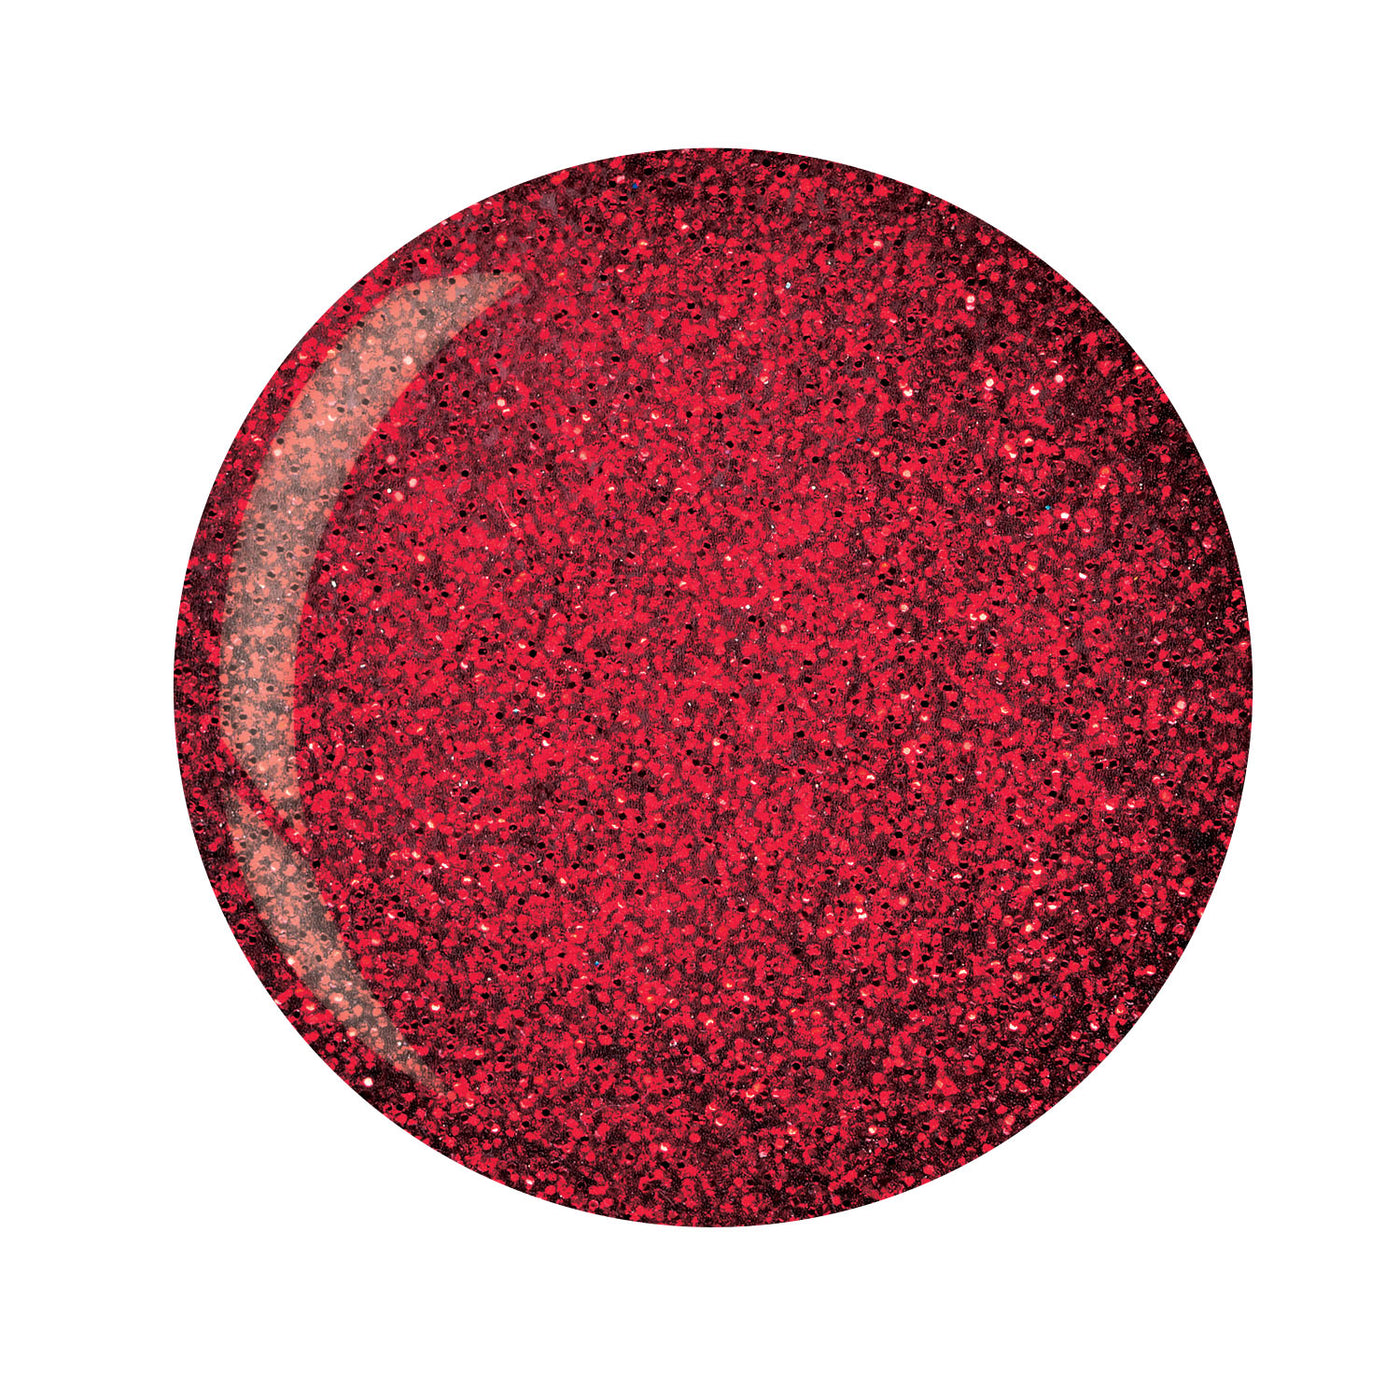 CP Dipping Powder14g - 5545-5 Dark Red Glitter